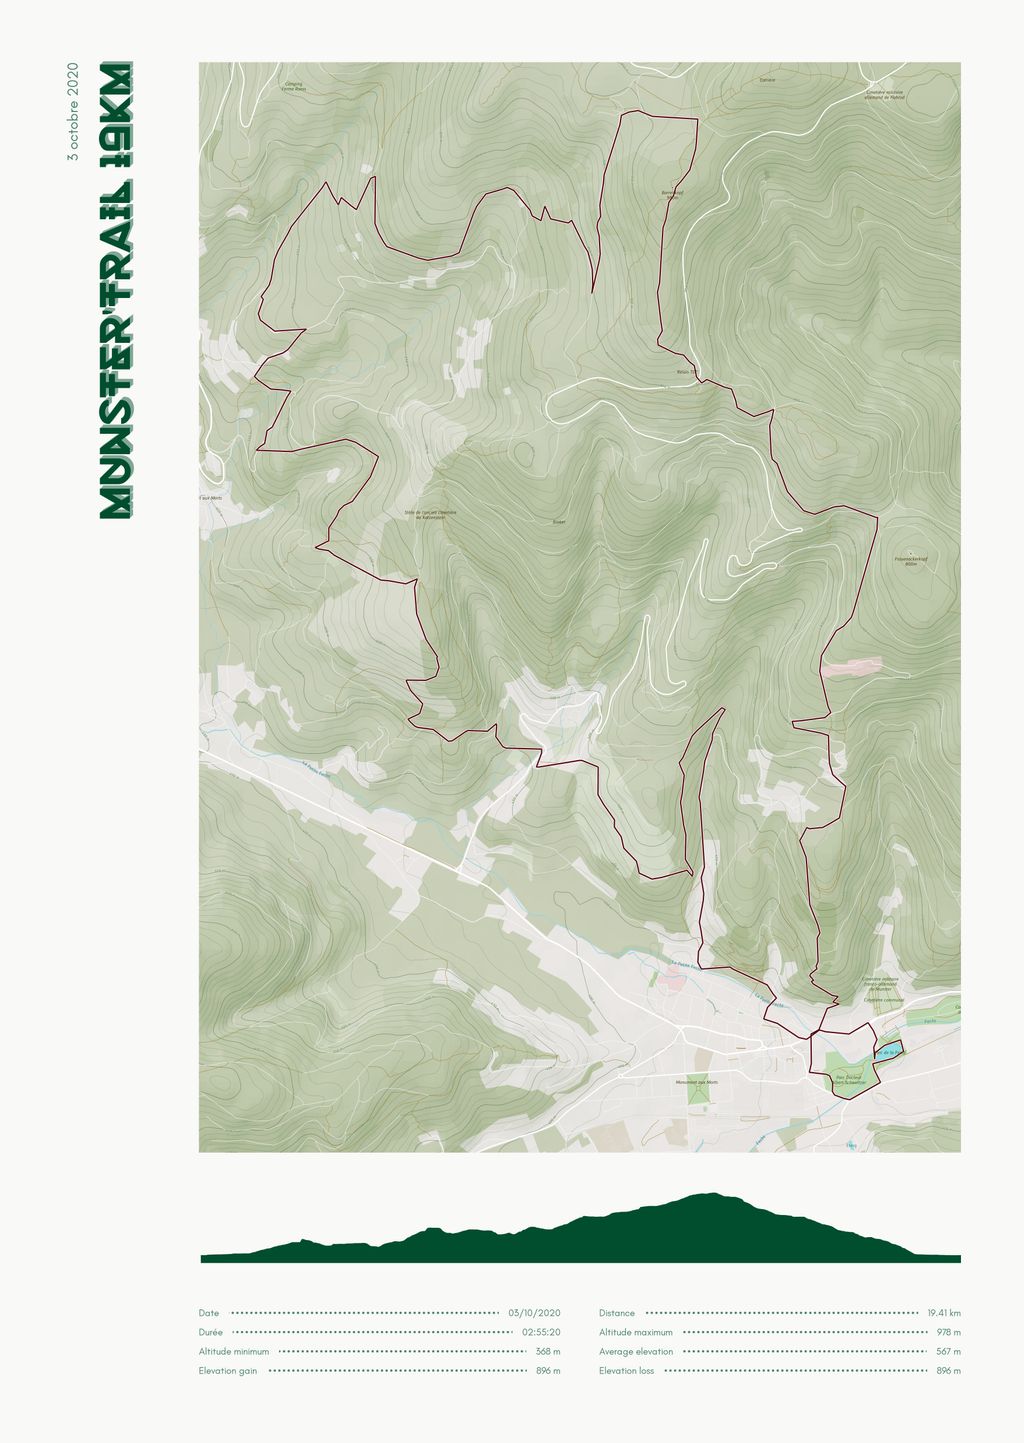 Póster con un mapa de Munster'Trail 19km